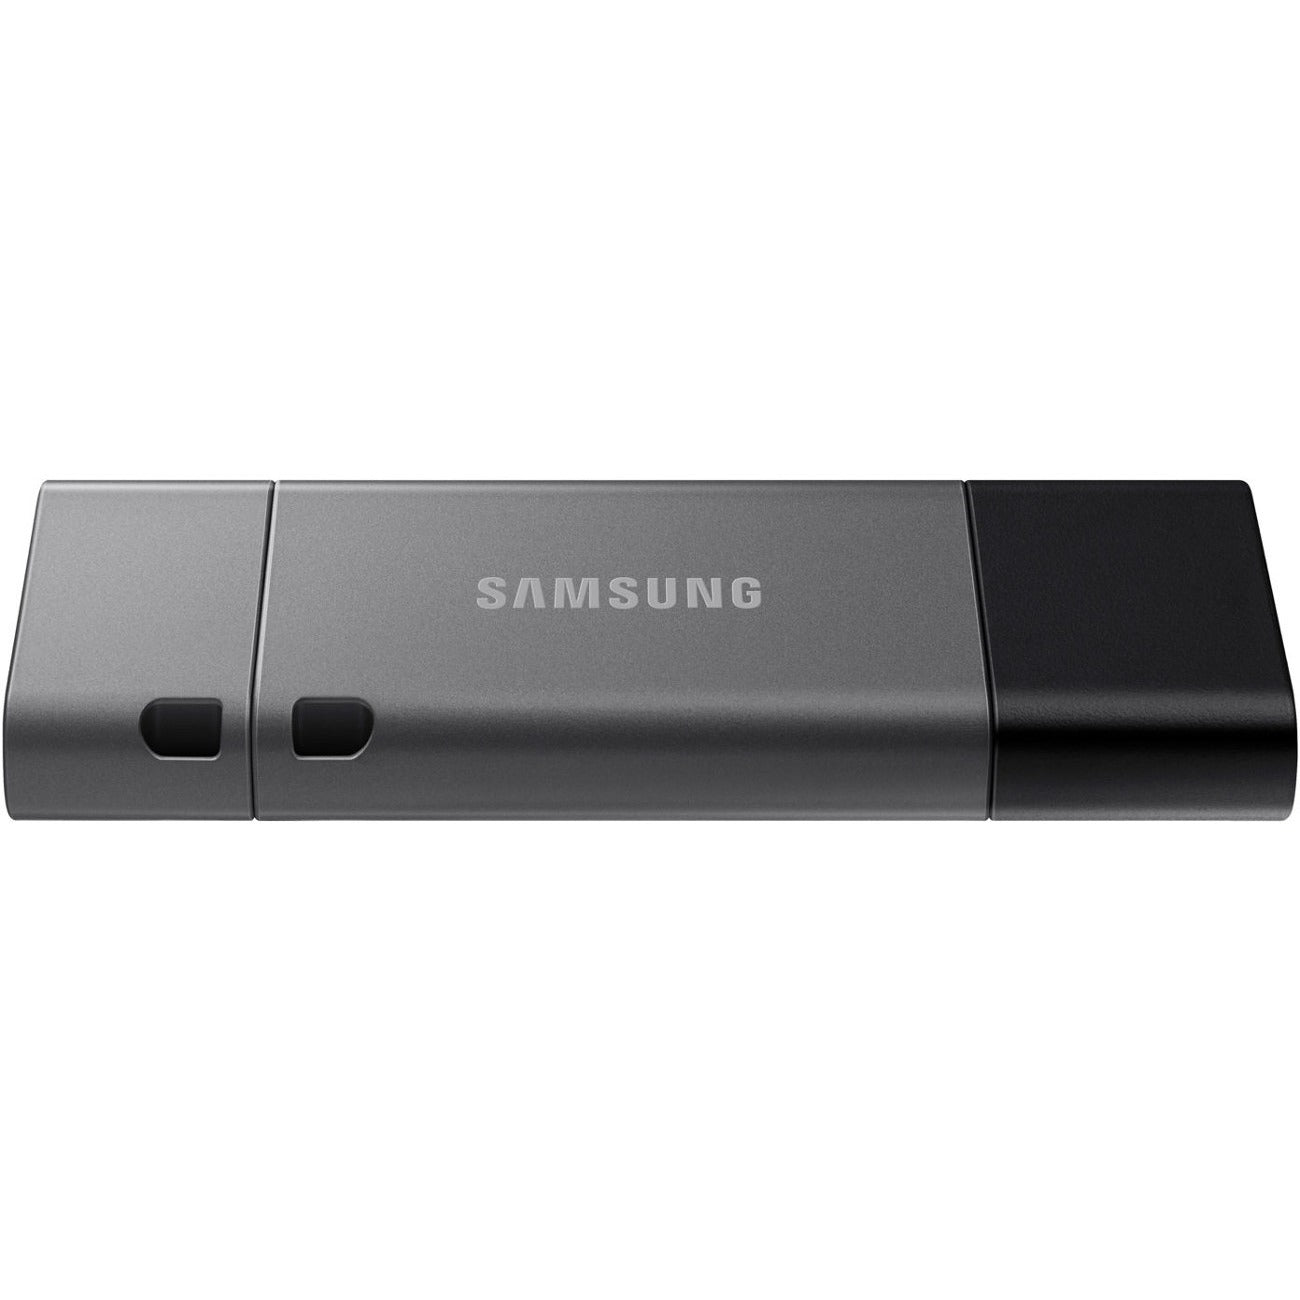 Samsung USB 3.1 Flash Drive DUO Plus 128GB